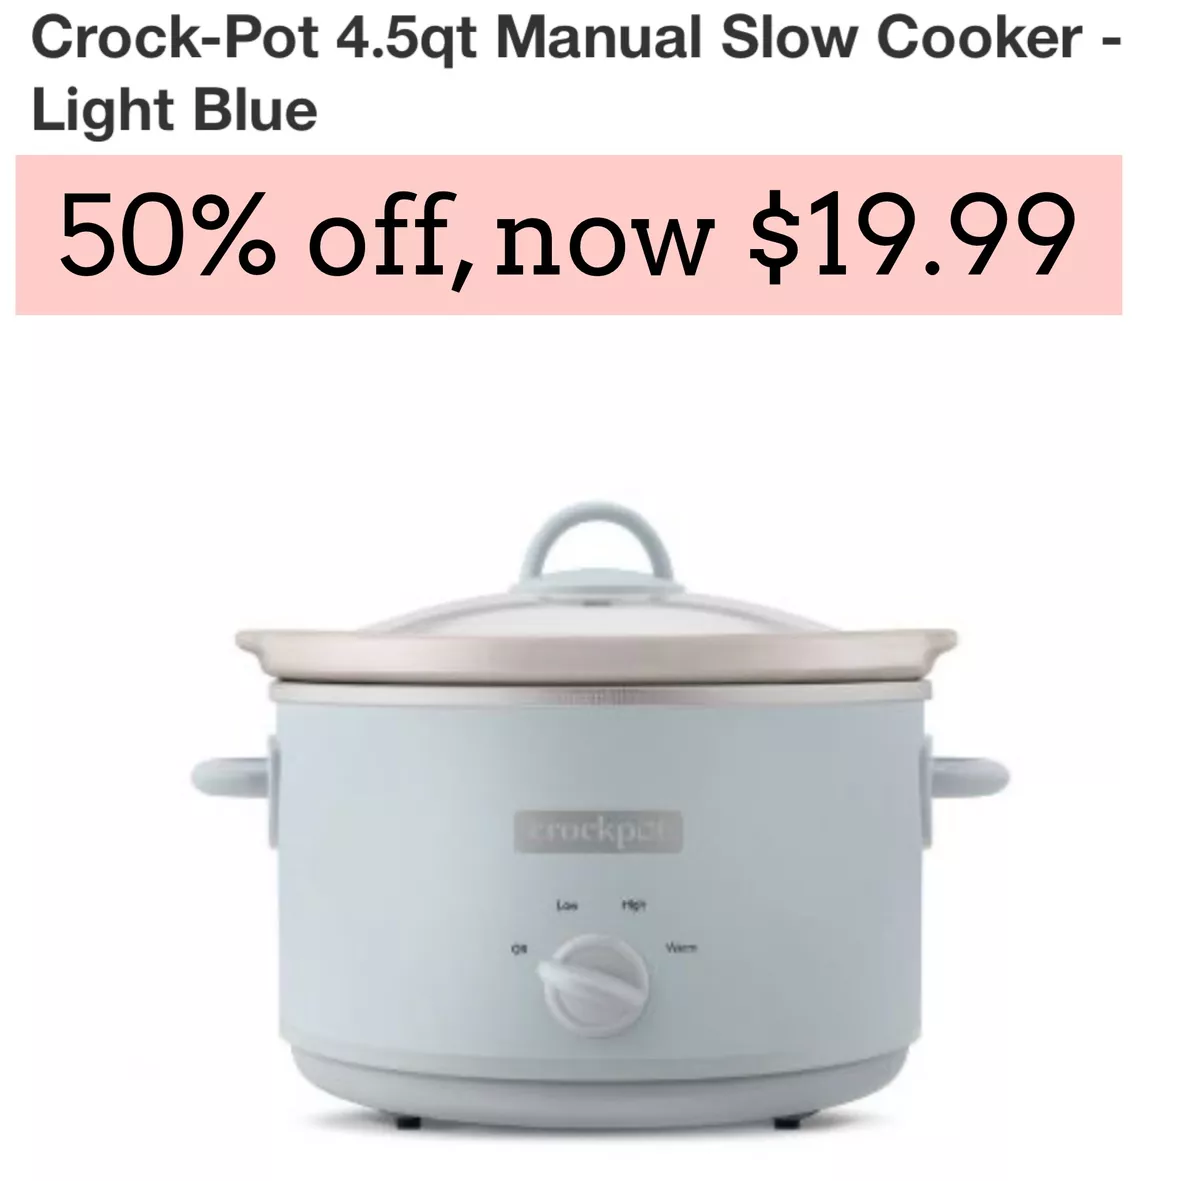 CrockPot 4.5qt Manual Slow Cooker - Light Blue